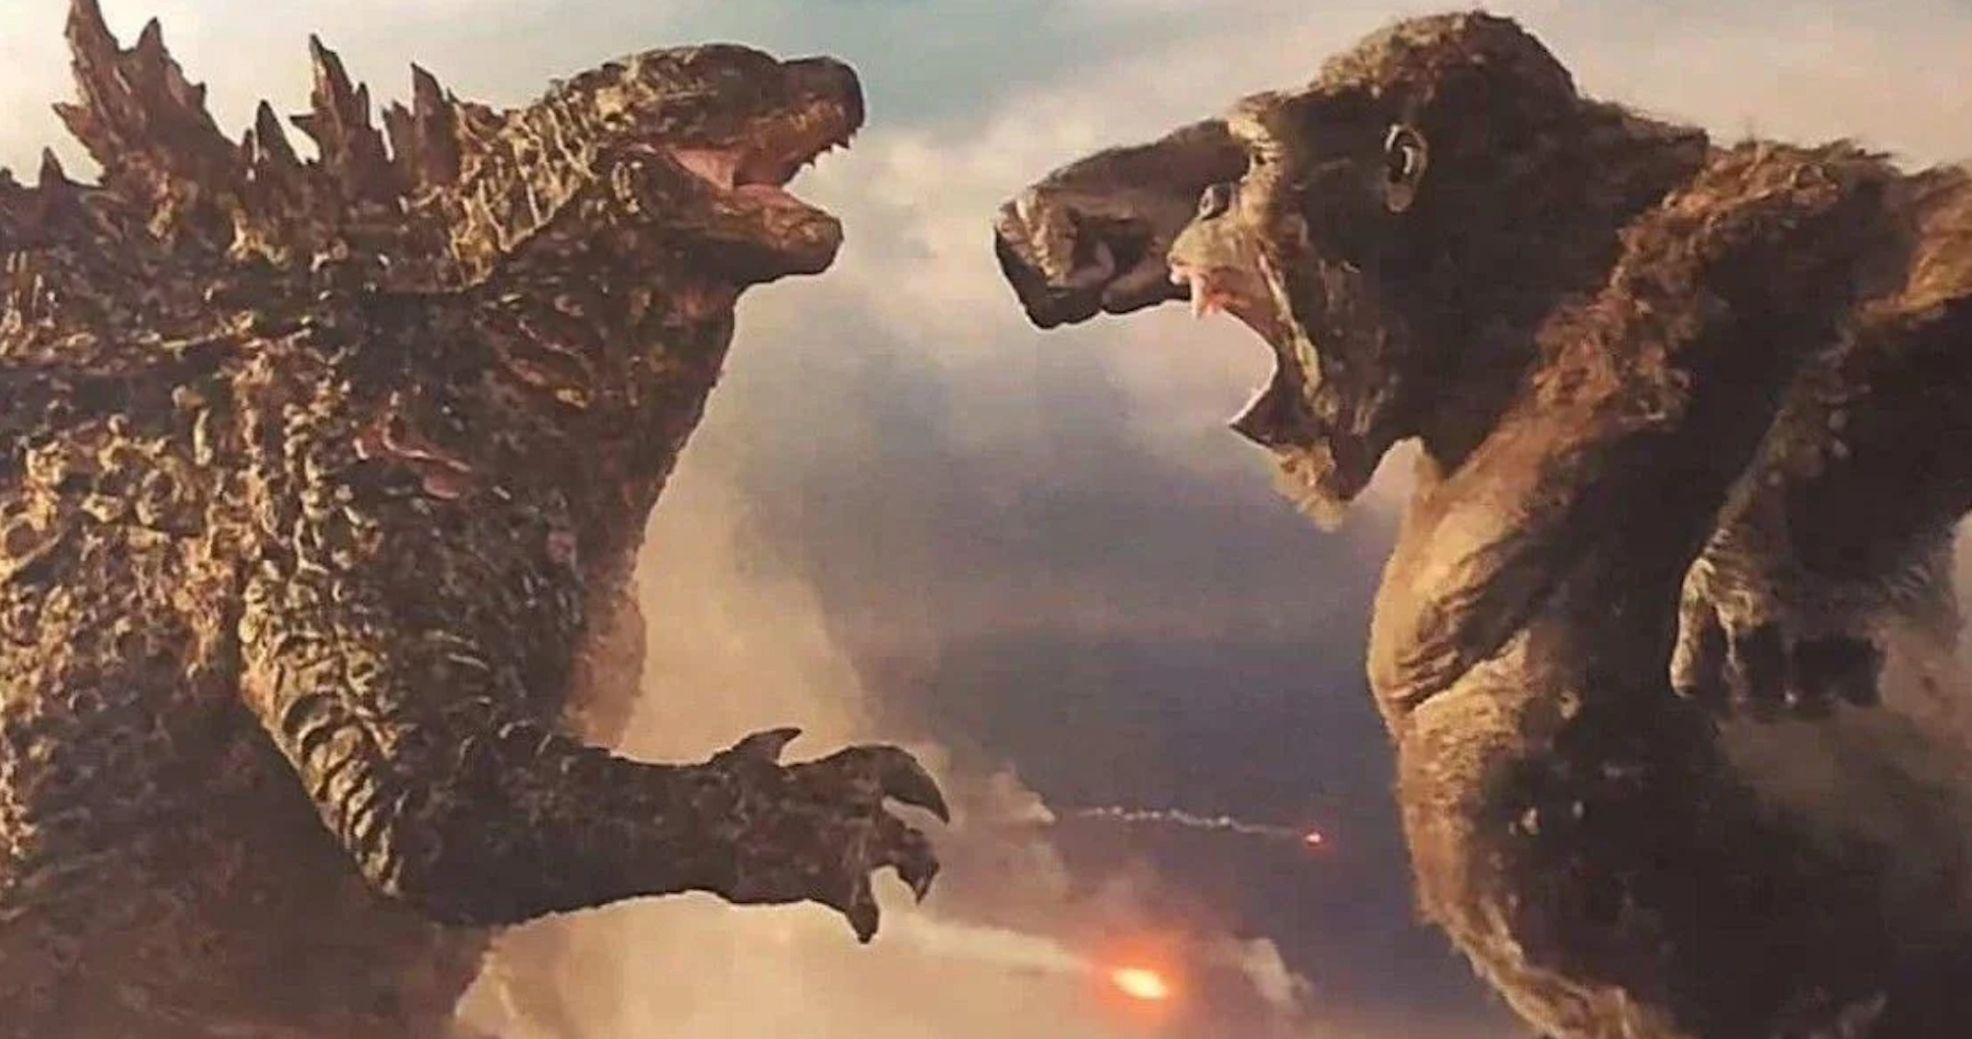 Godzilla Vs. Kong Has Lowest Budget in Legendary's MonsterVerse Franchise